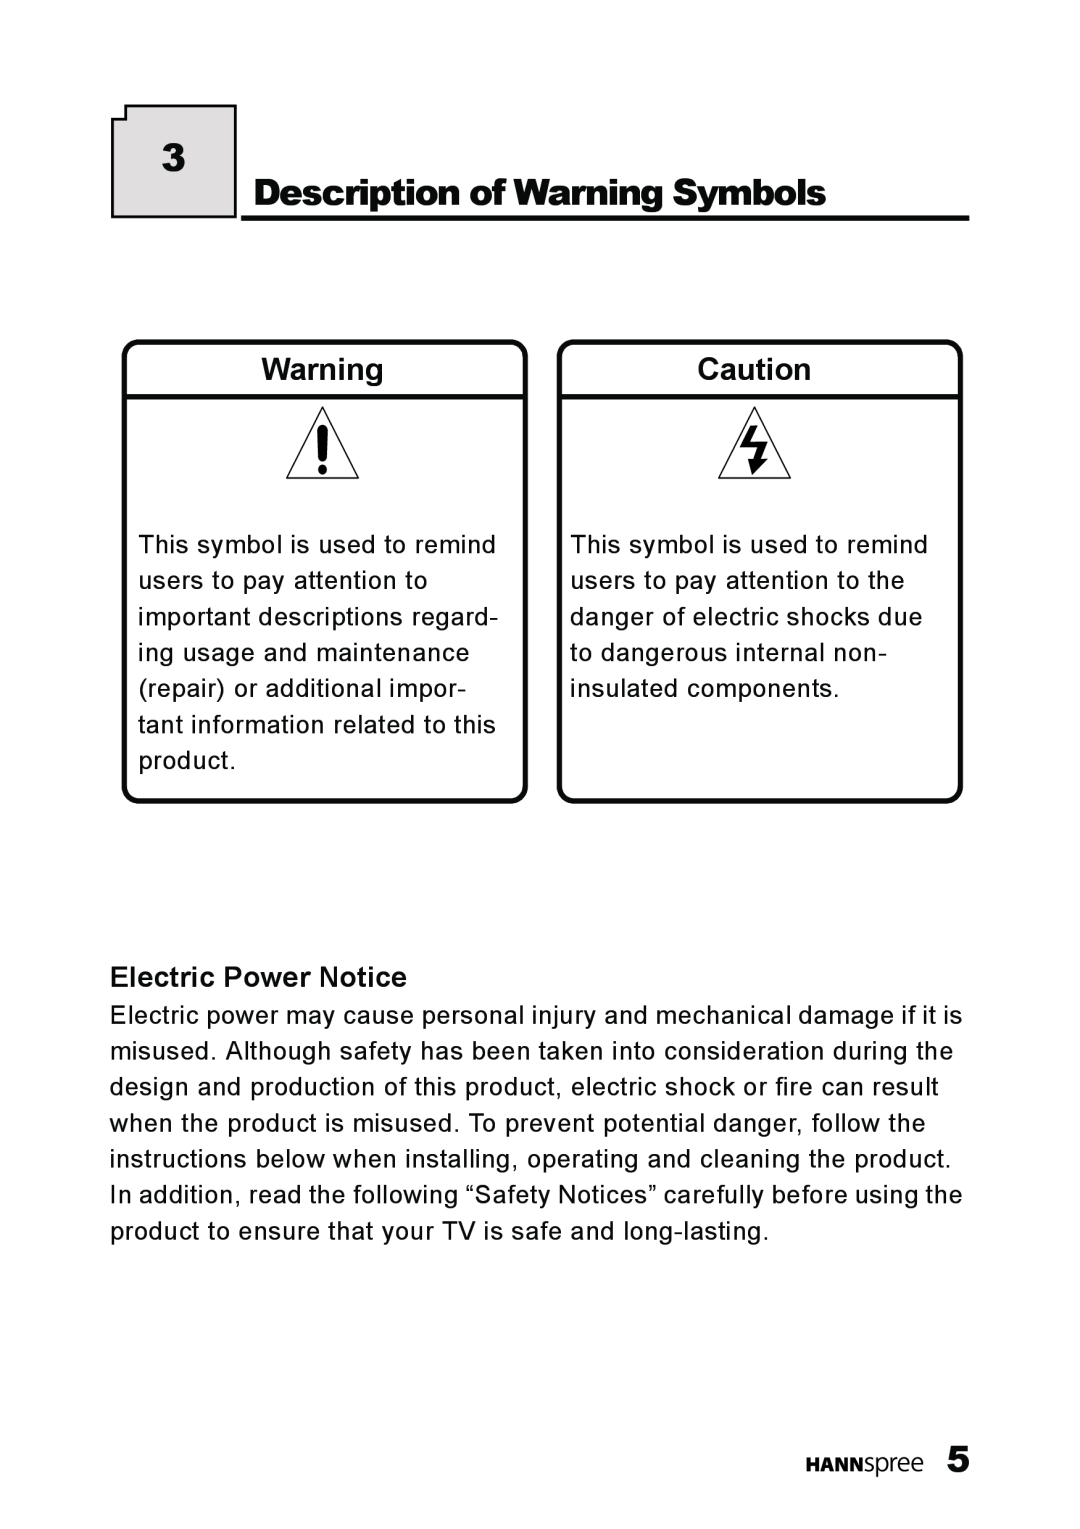 HANNspree ST09-10A1 user manual Description of Warning Symbols, WarningCaution, Electric Power Notice 